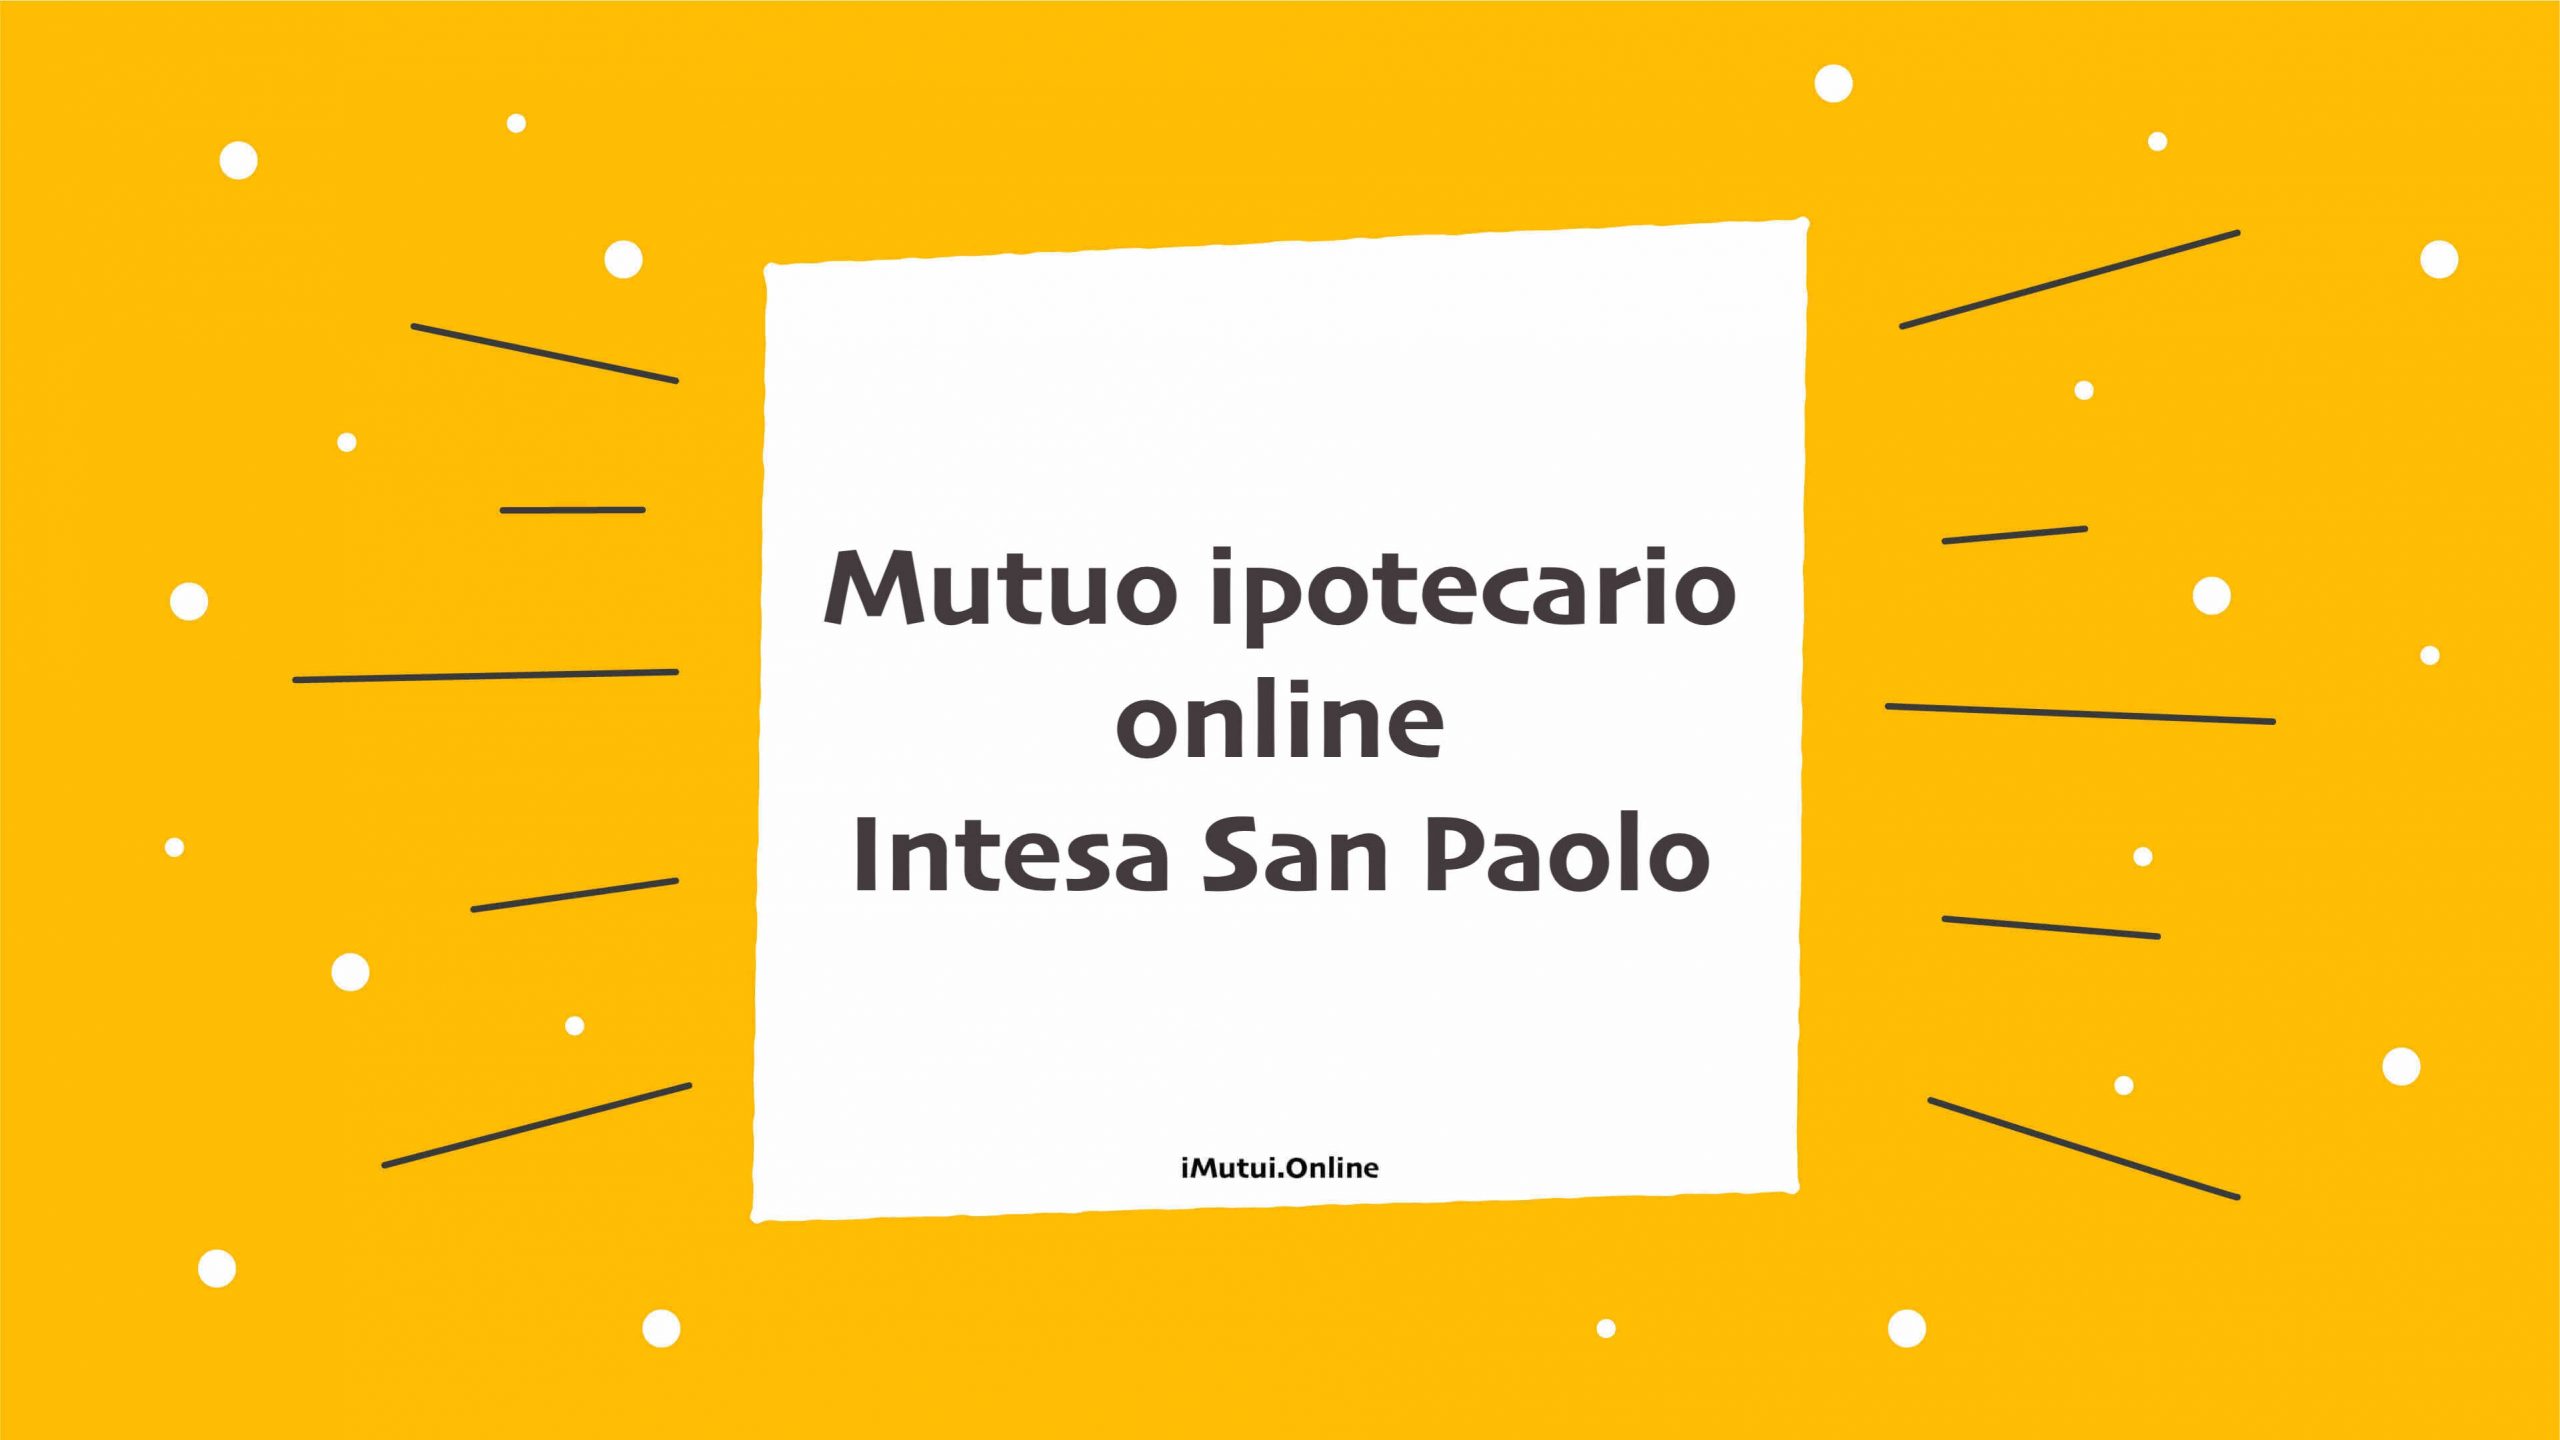 Mutuo ipotecario online Intesa San Paolo